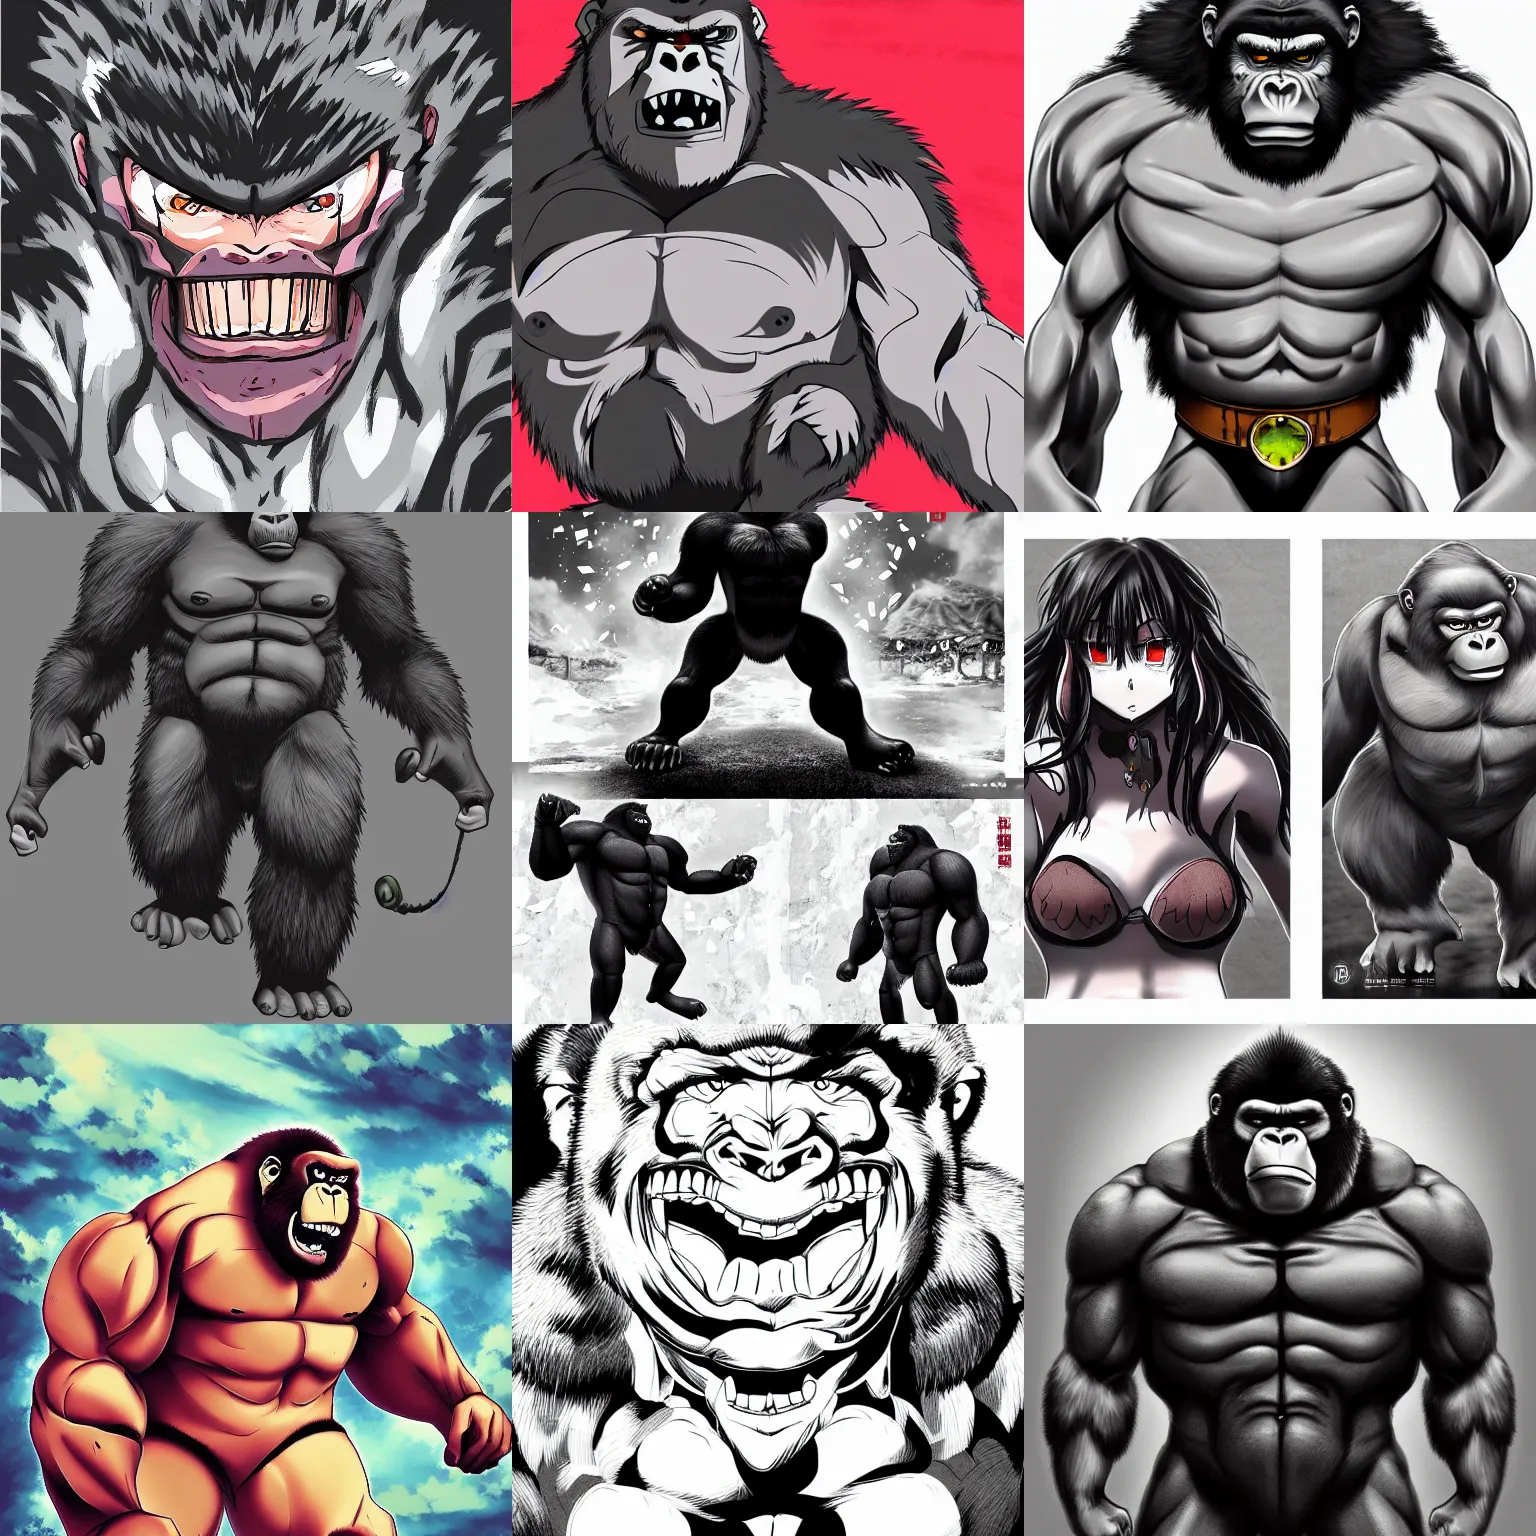 Prompt: Big angry gorilla anime manga, trending on artstation